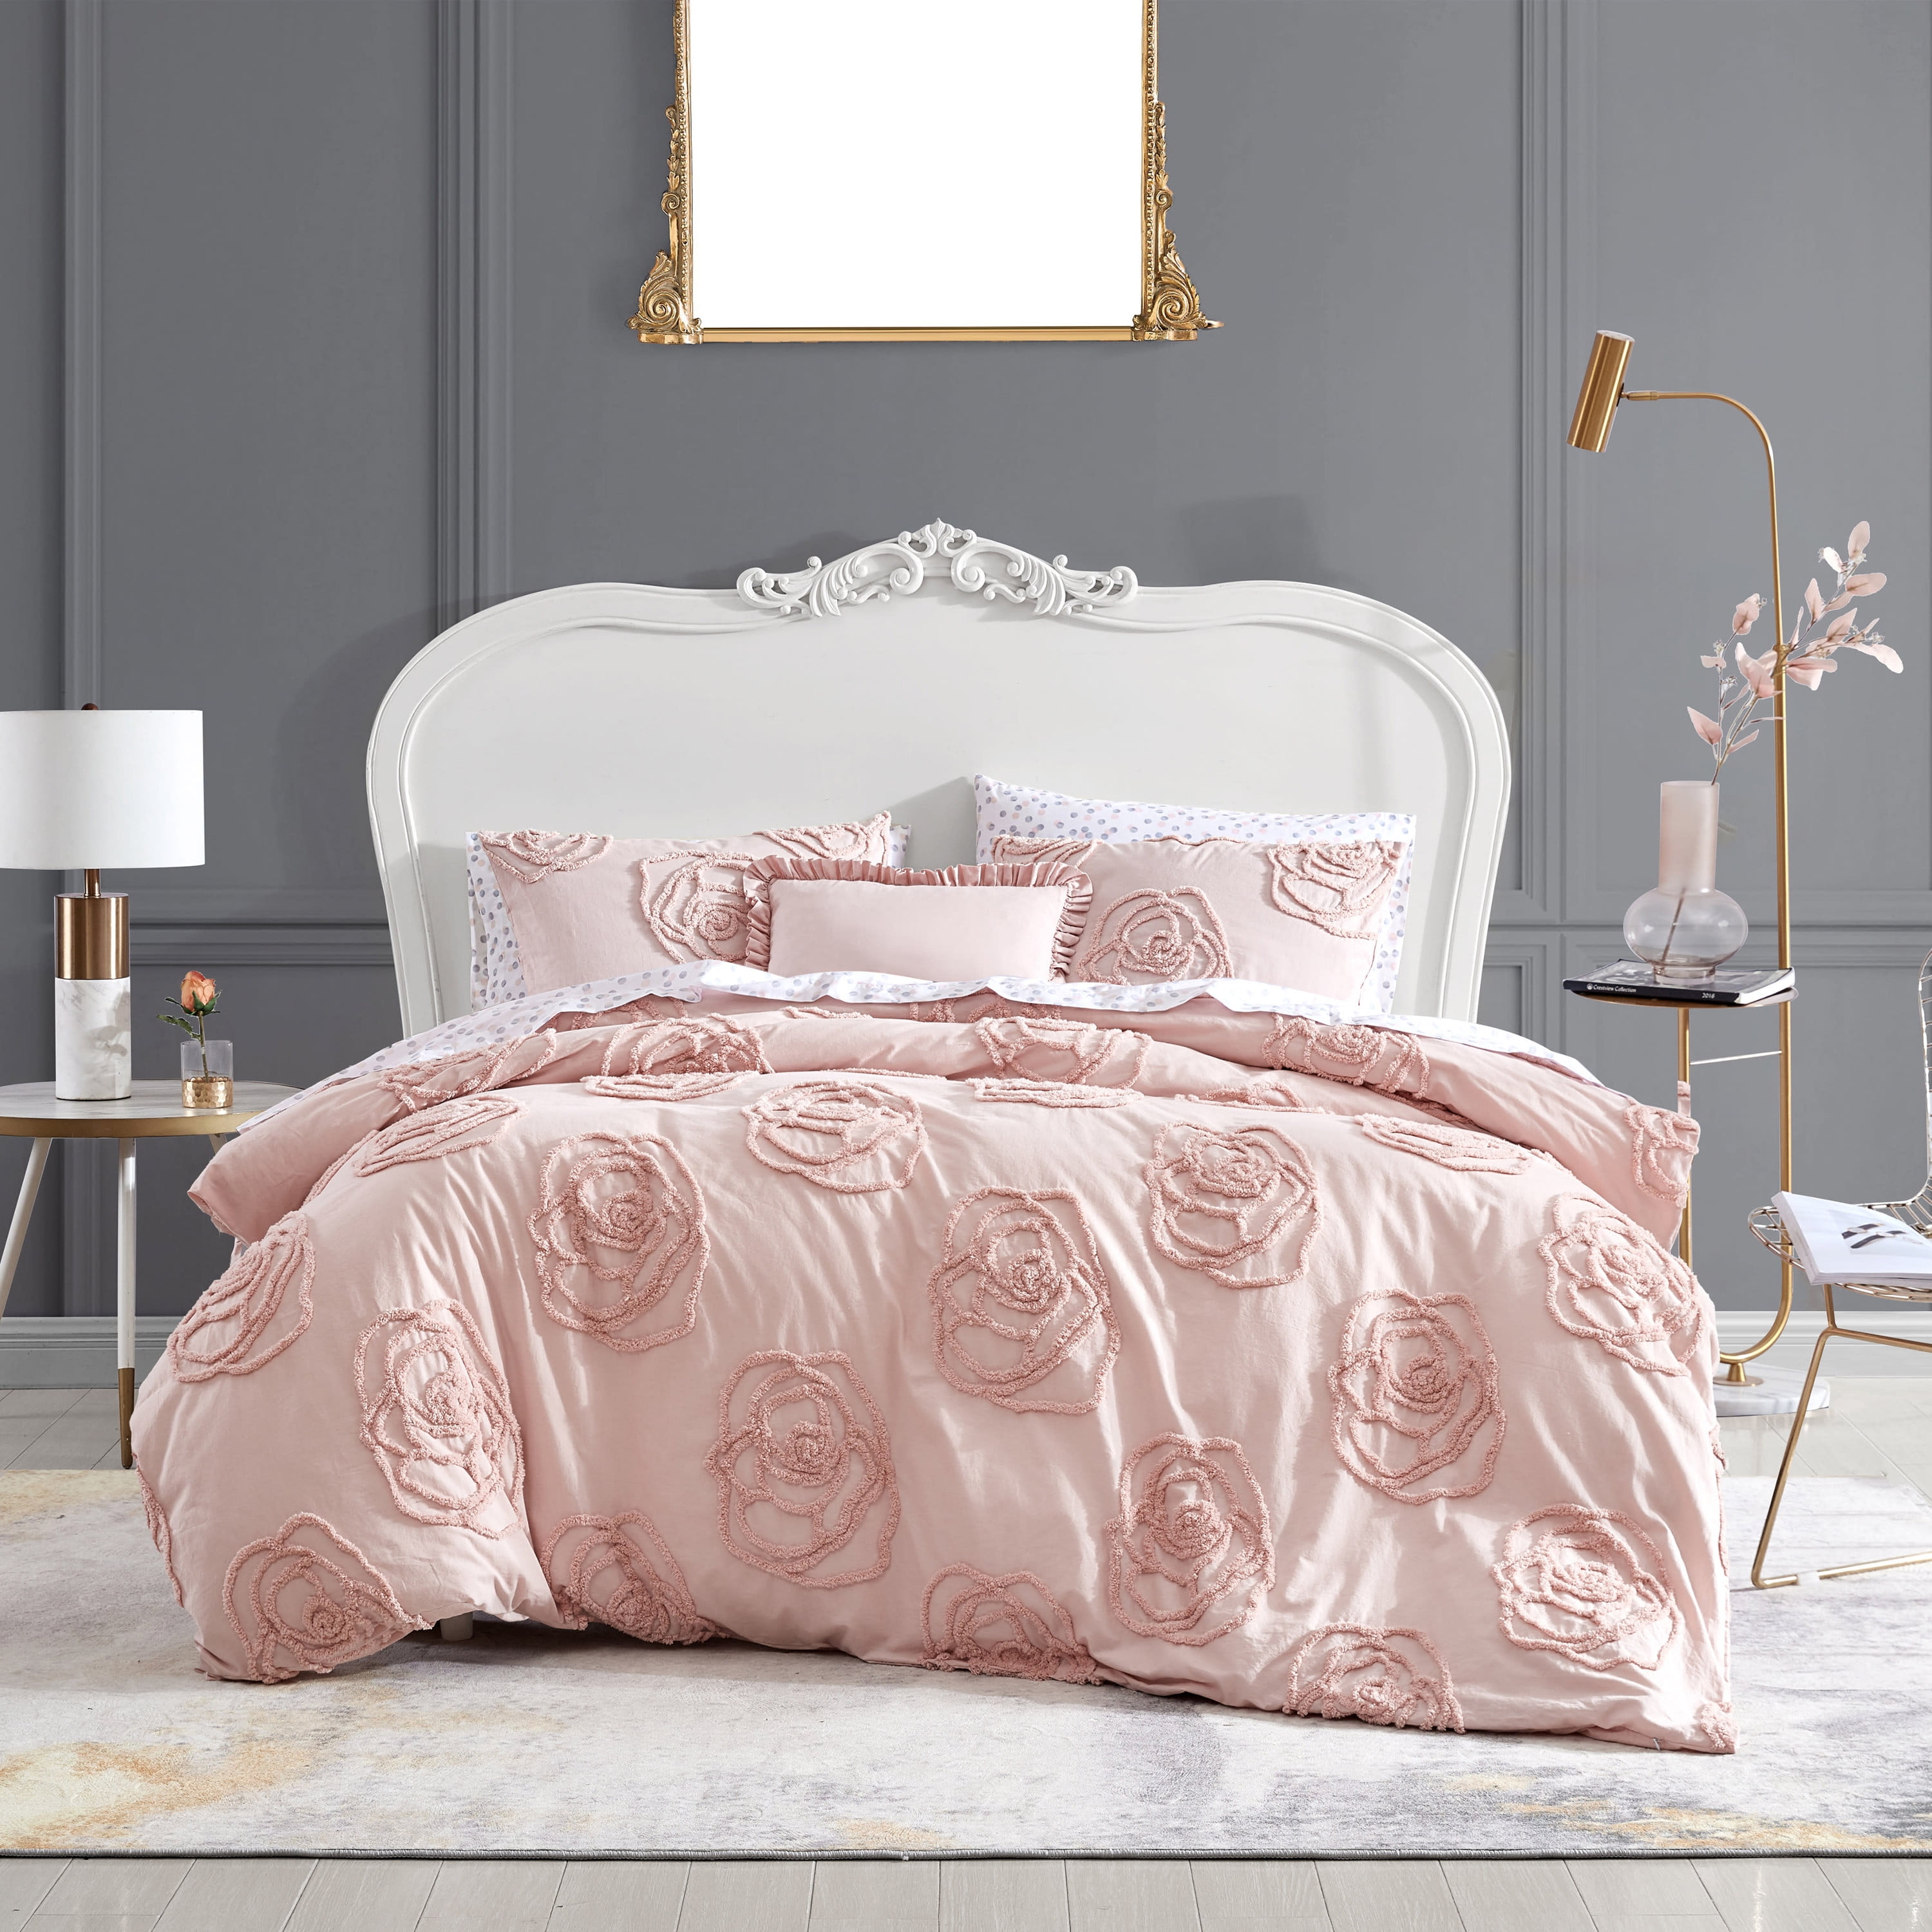 Details about   Betsey Johnson Romantic Roses Comforter Set King Black 